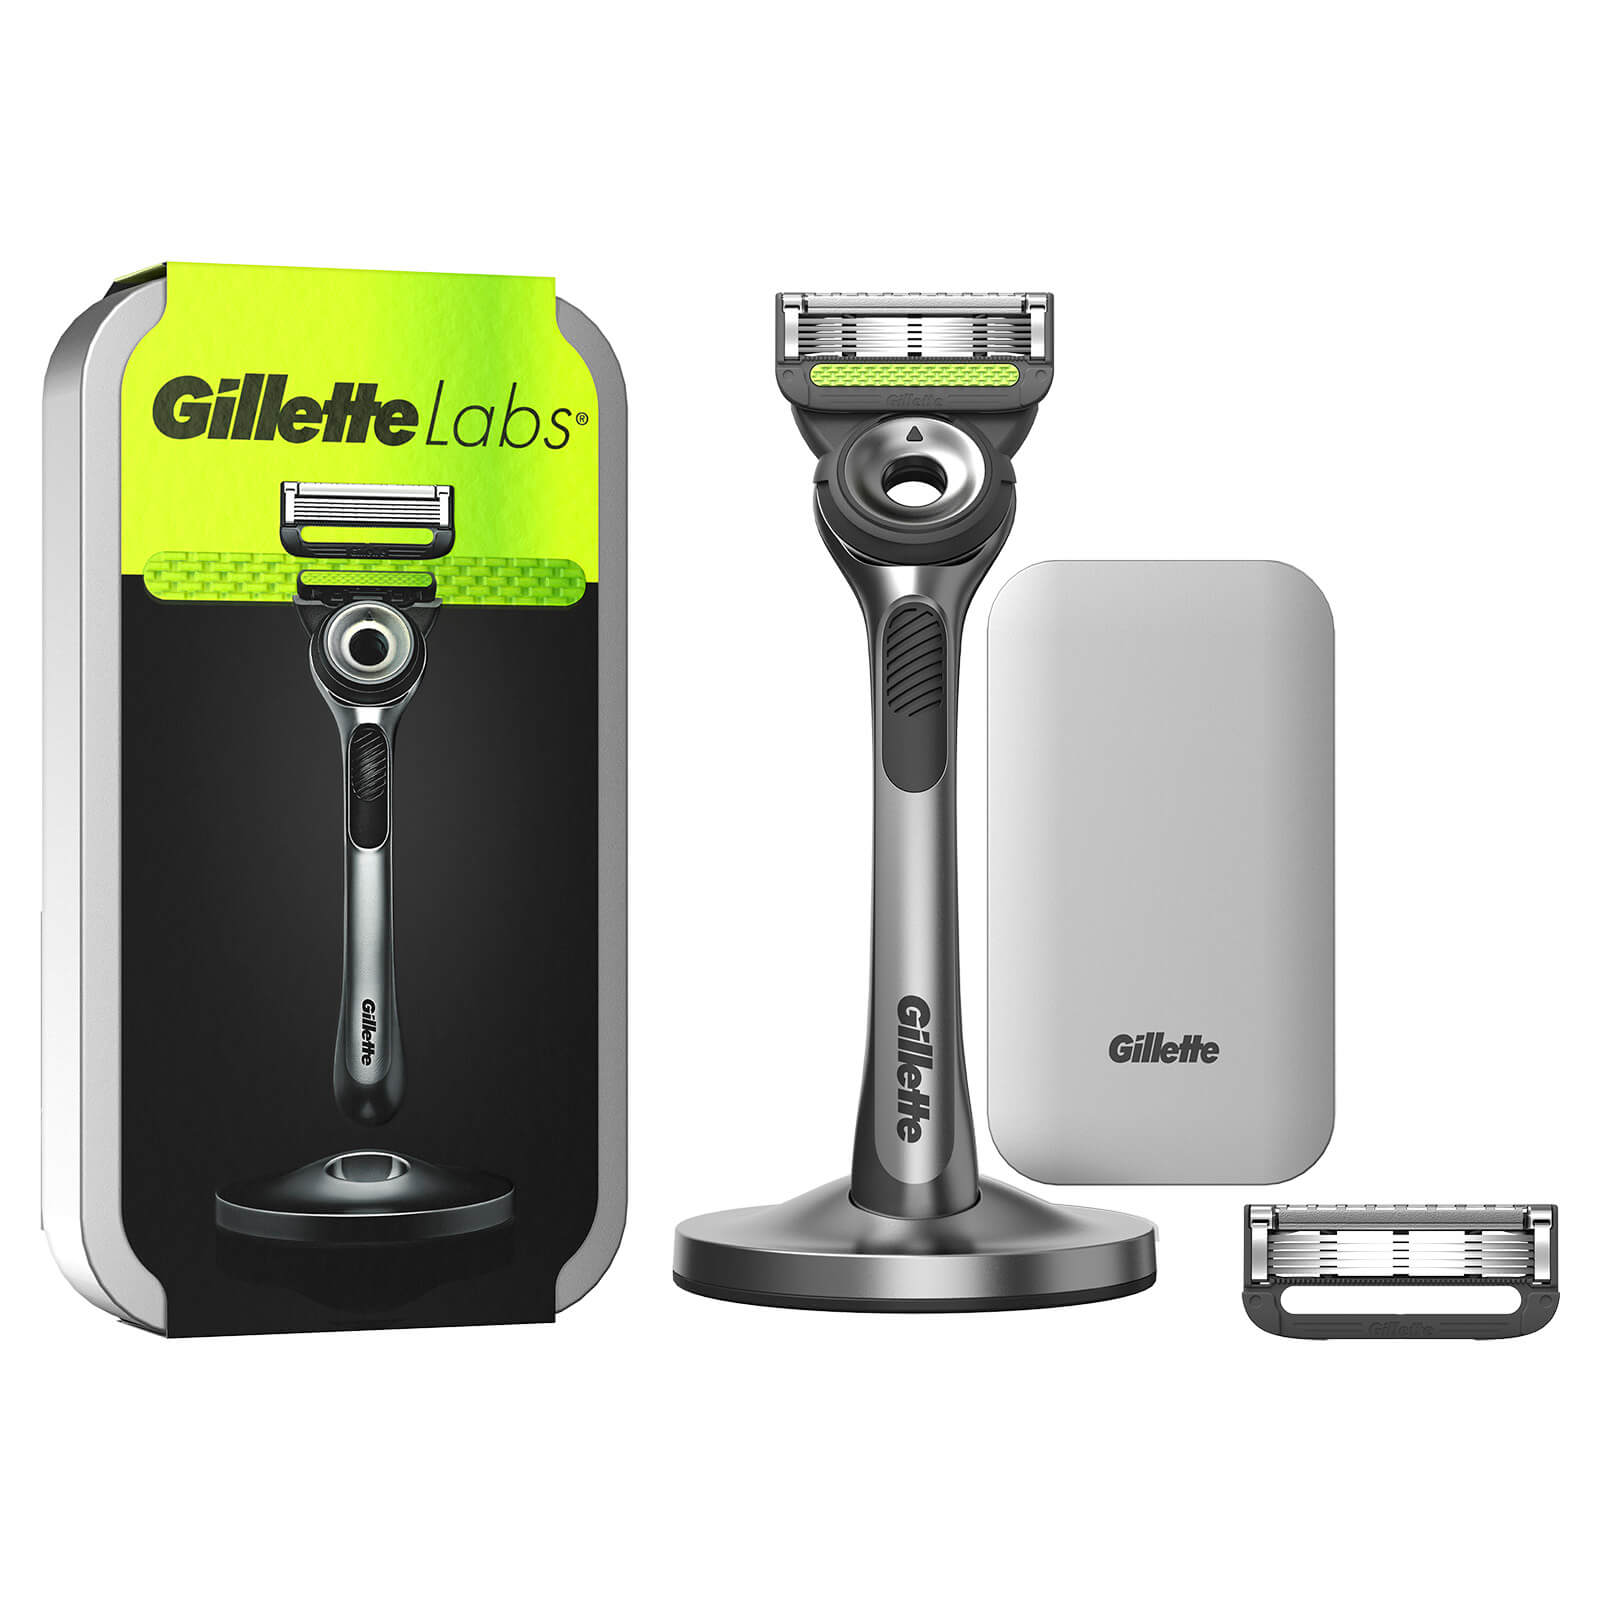 Gillette Labs Razor  Travel Case and 1 Blade Refill - Silver